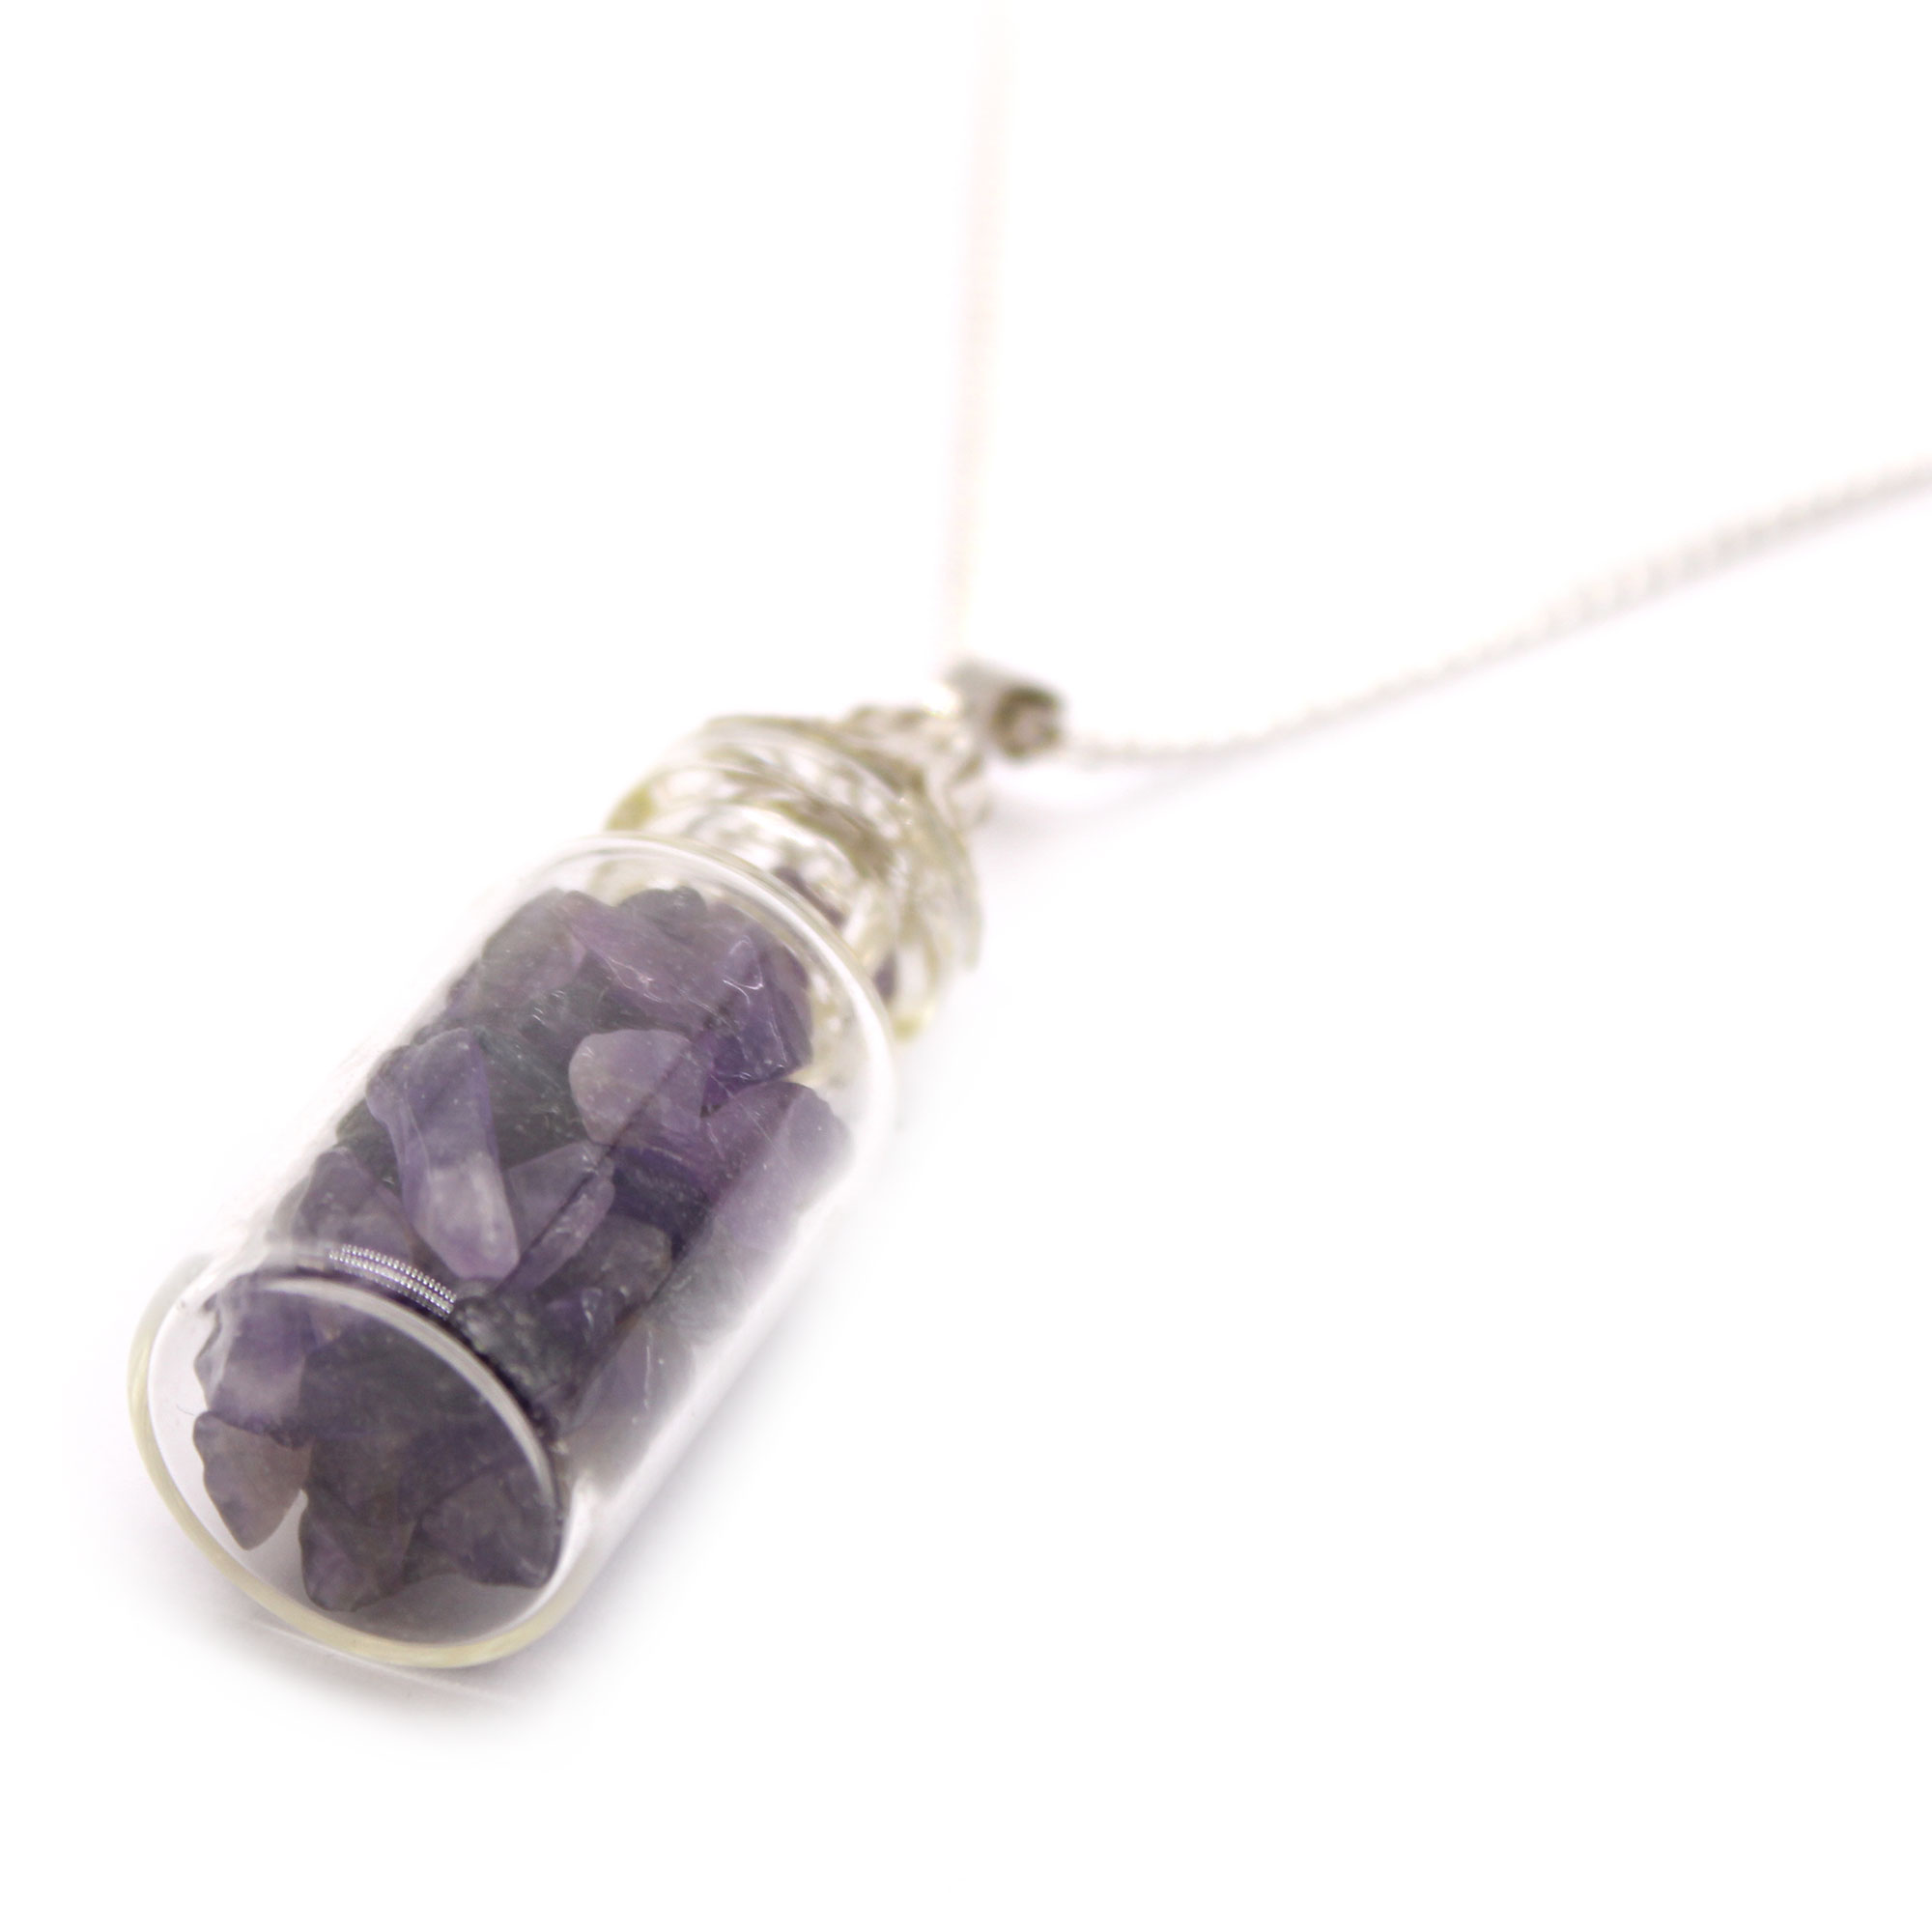 Bottled Gemstones Necklace - Amethyst - Click Image to Close